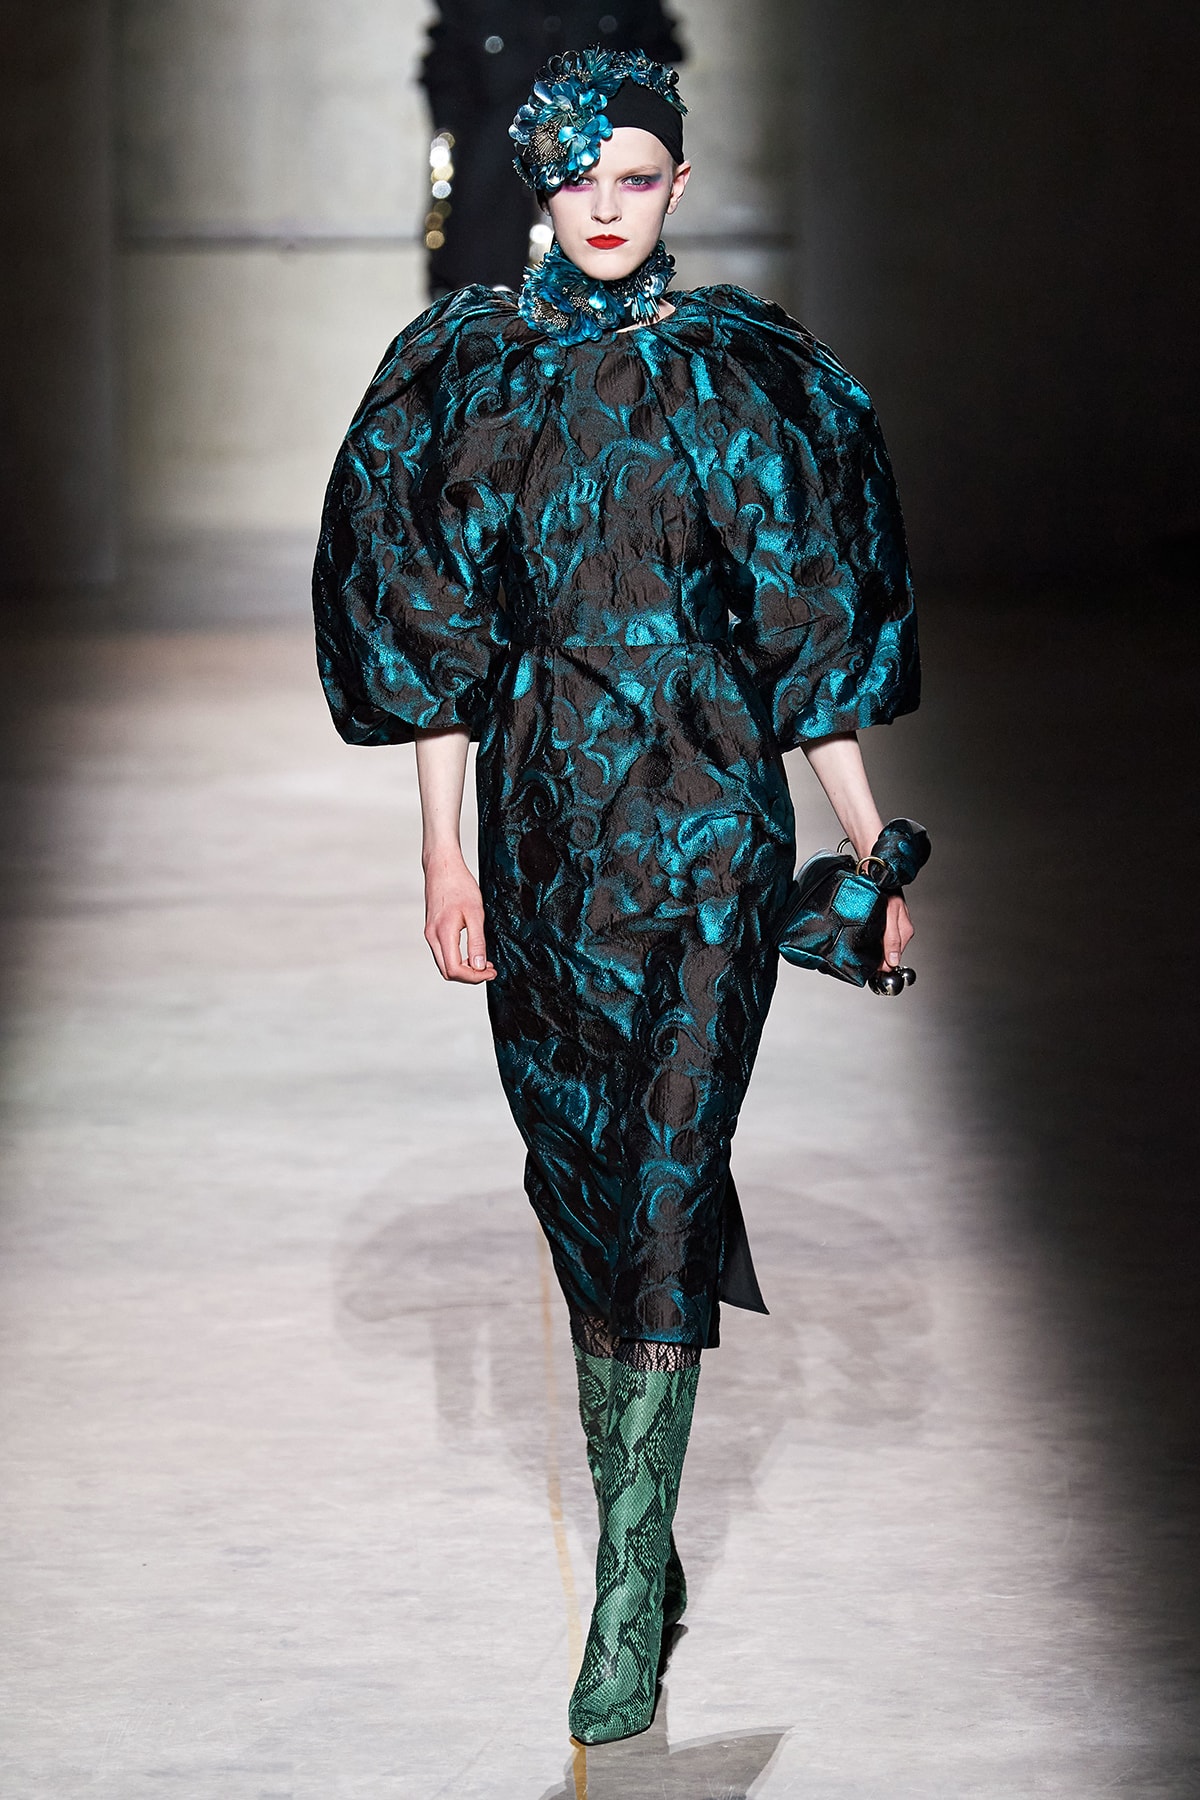 Dries Van Noten Fall/Winter 2020 Collection Runway Show Brocade Dress